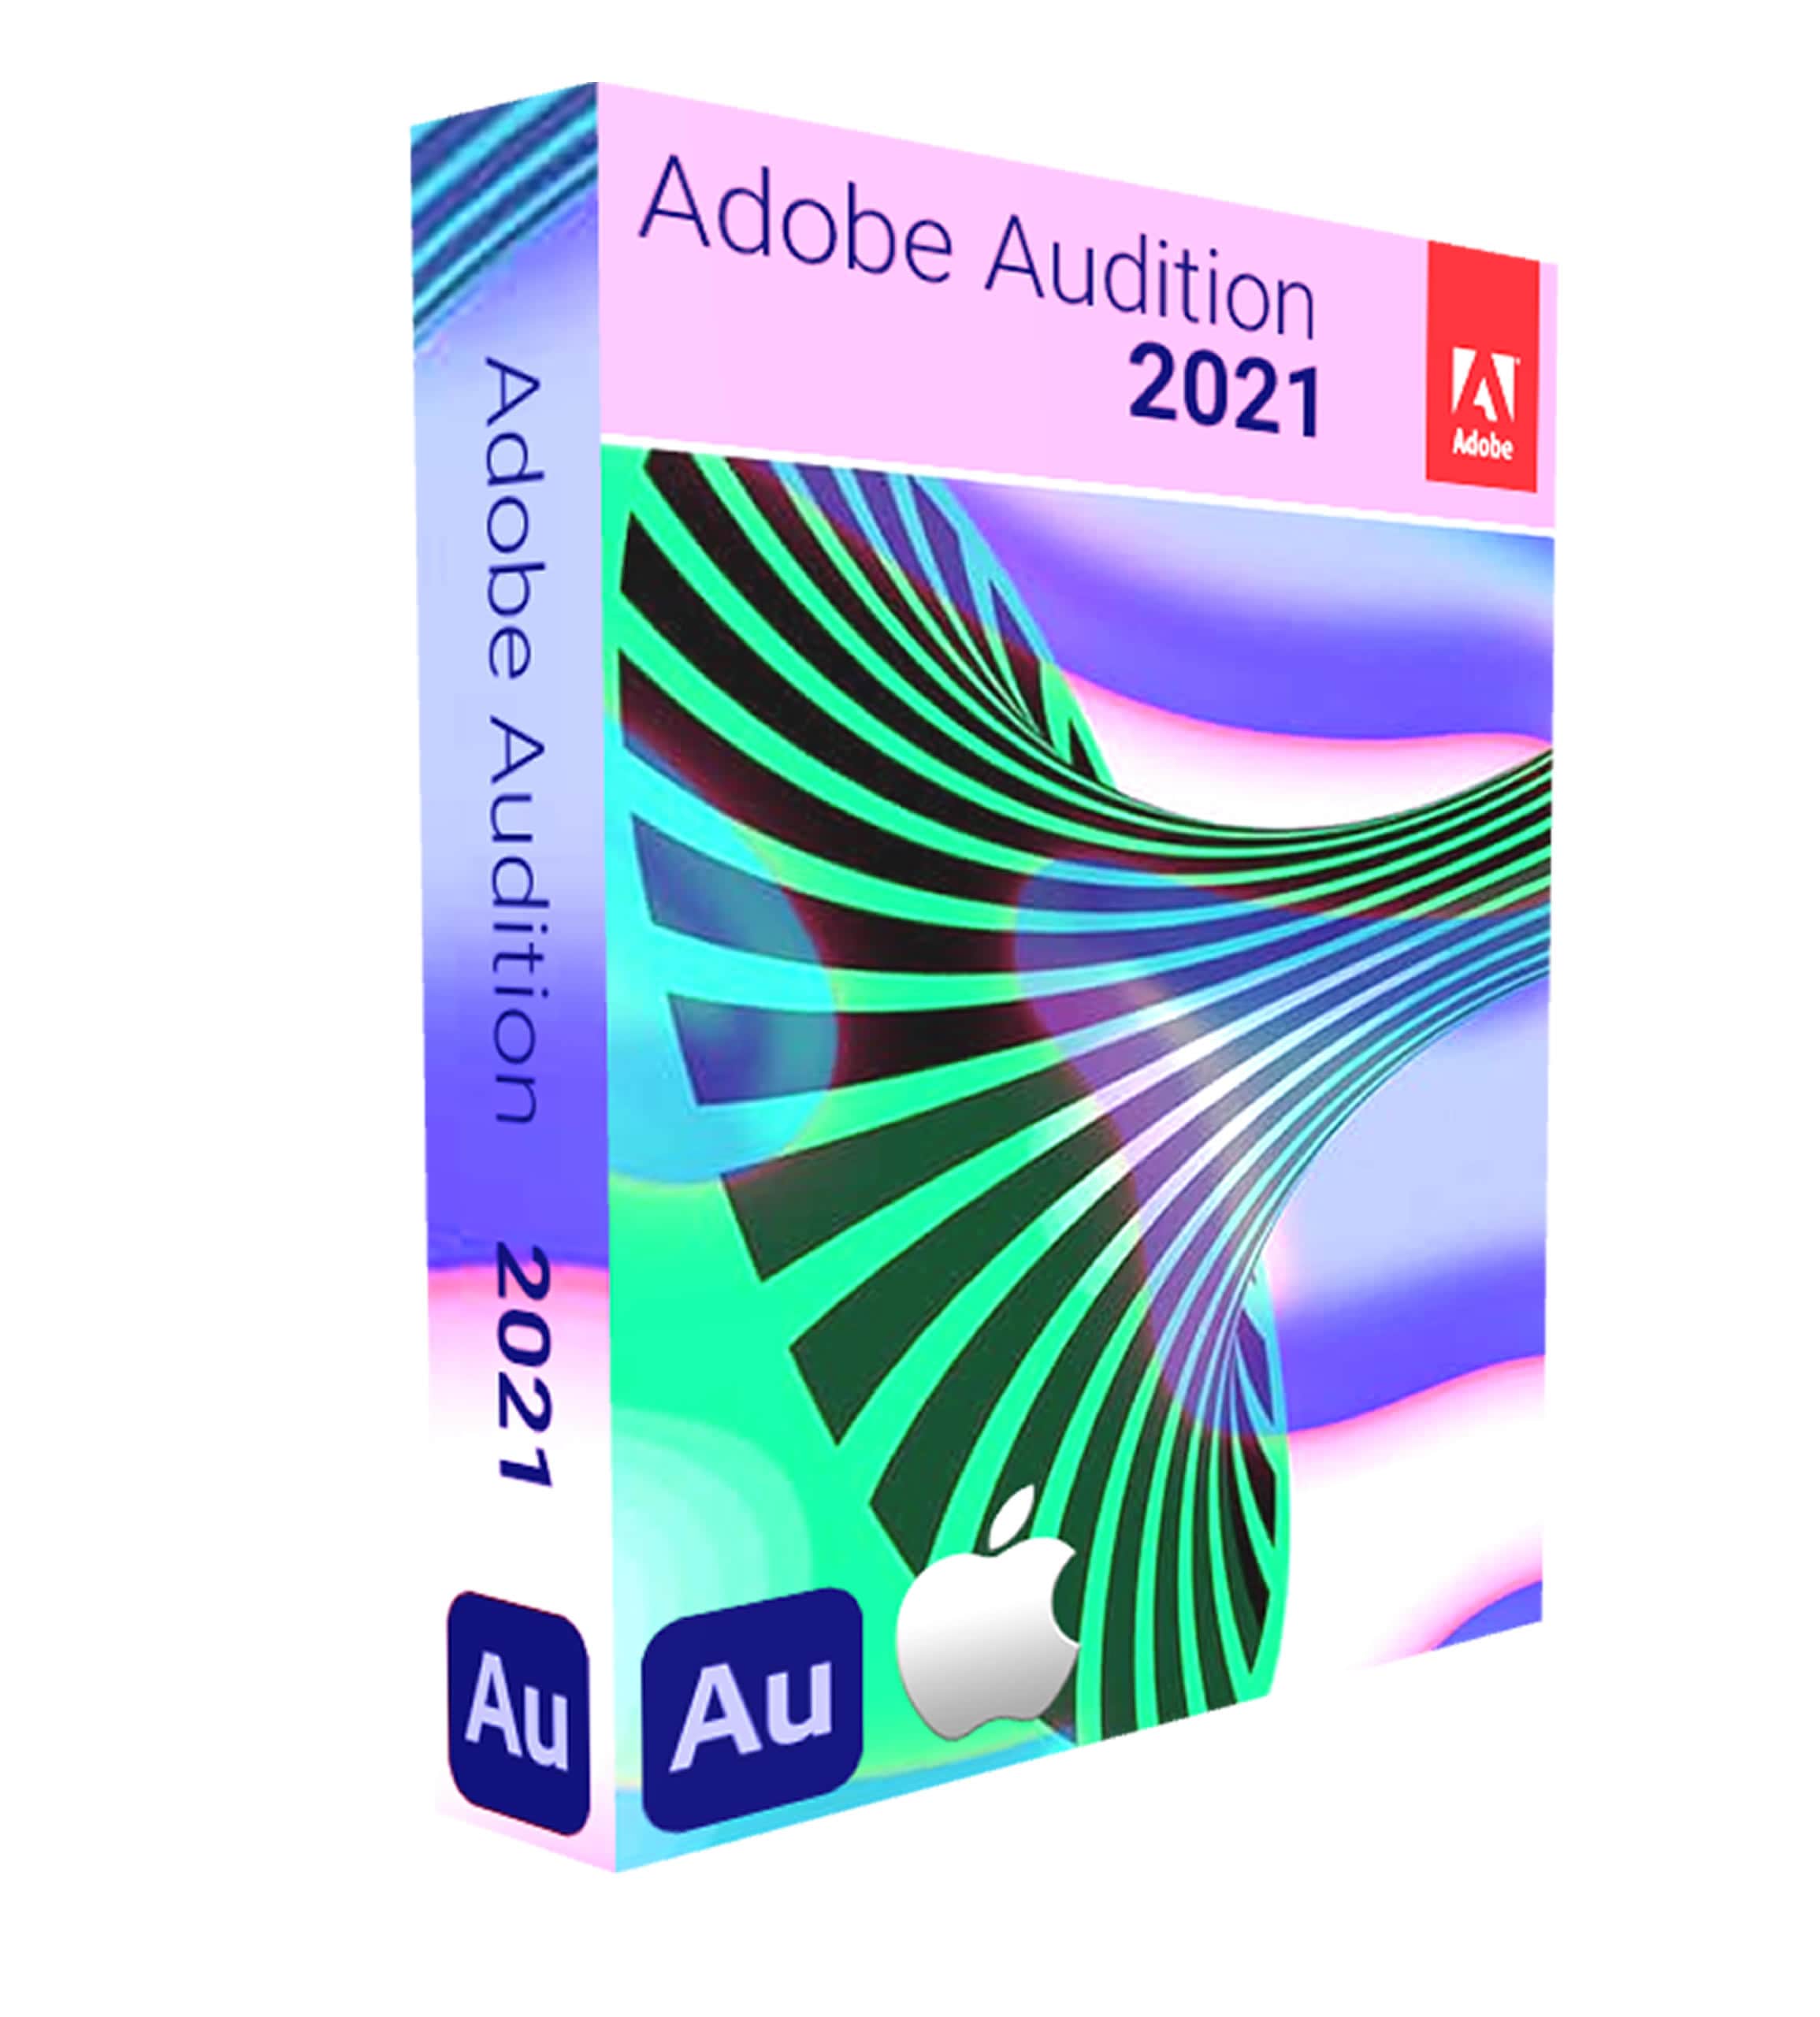 Adobe Audition 2021 for macOS (Lifetime Version) – The Software Guru